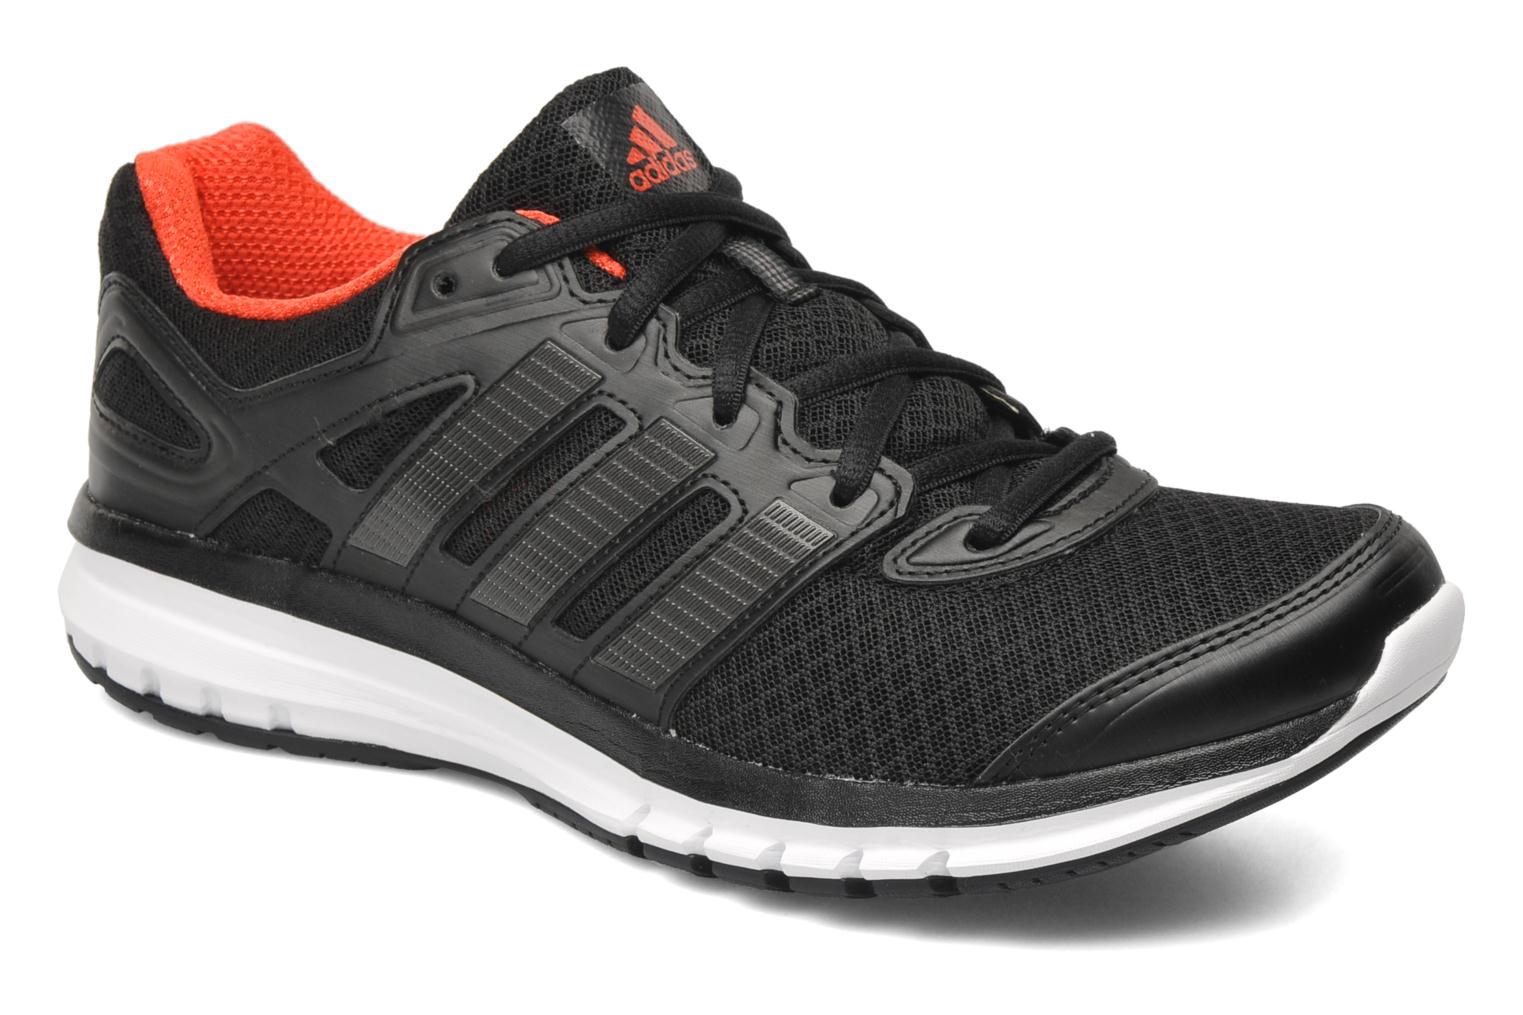 Adidas Performance Duramo 6 M Sport shoes in Black at Sarenza.co.uk ...